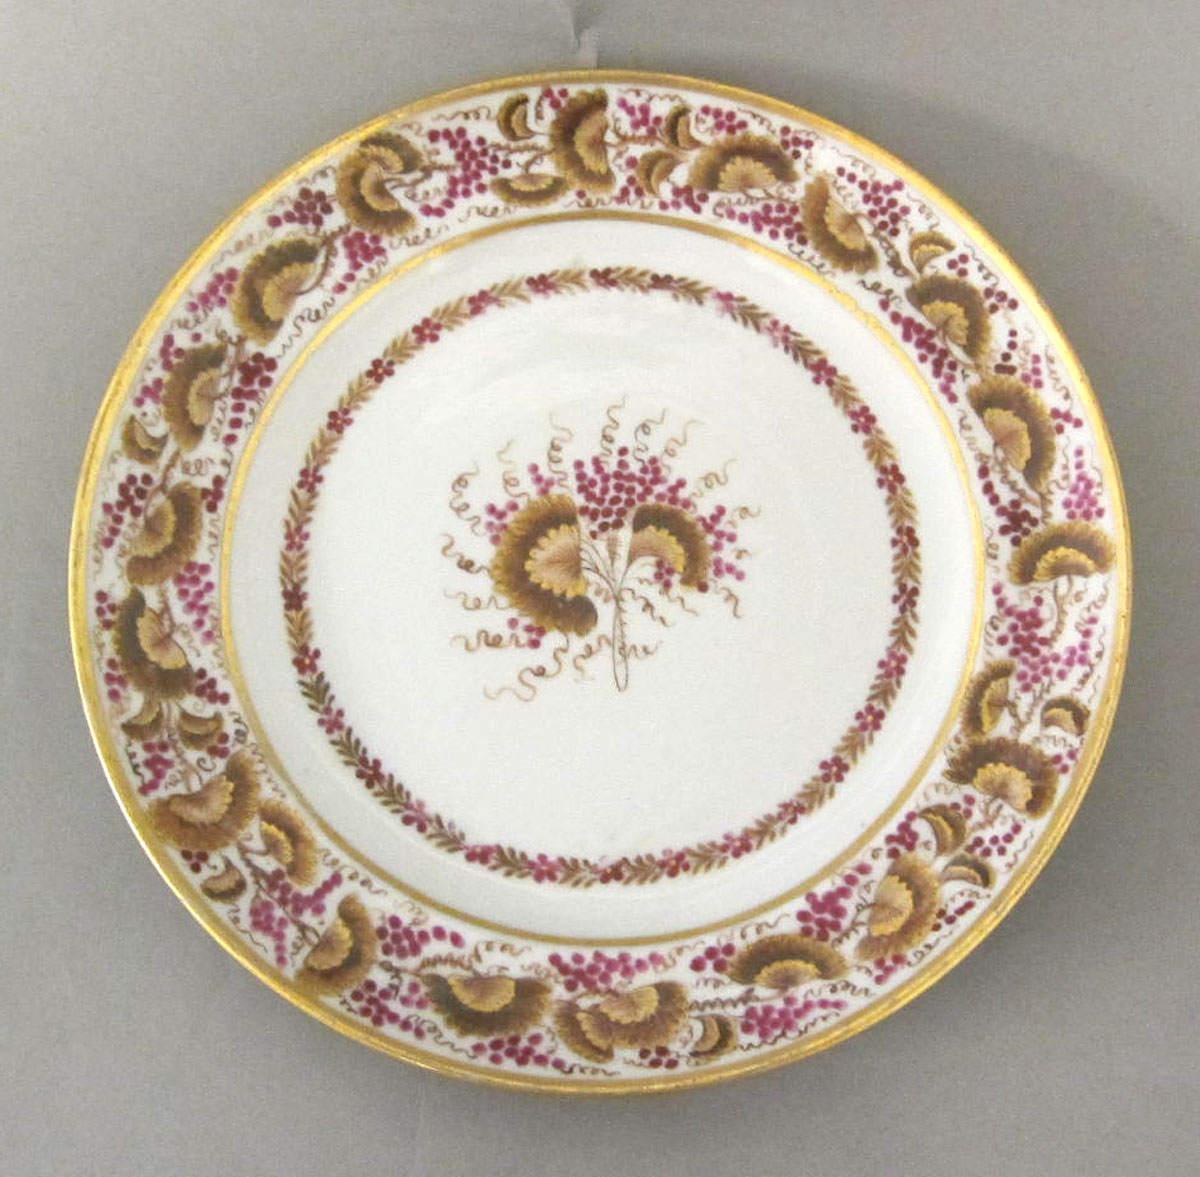 1963.0762.003 Porcelain plate